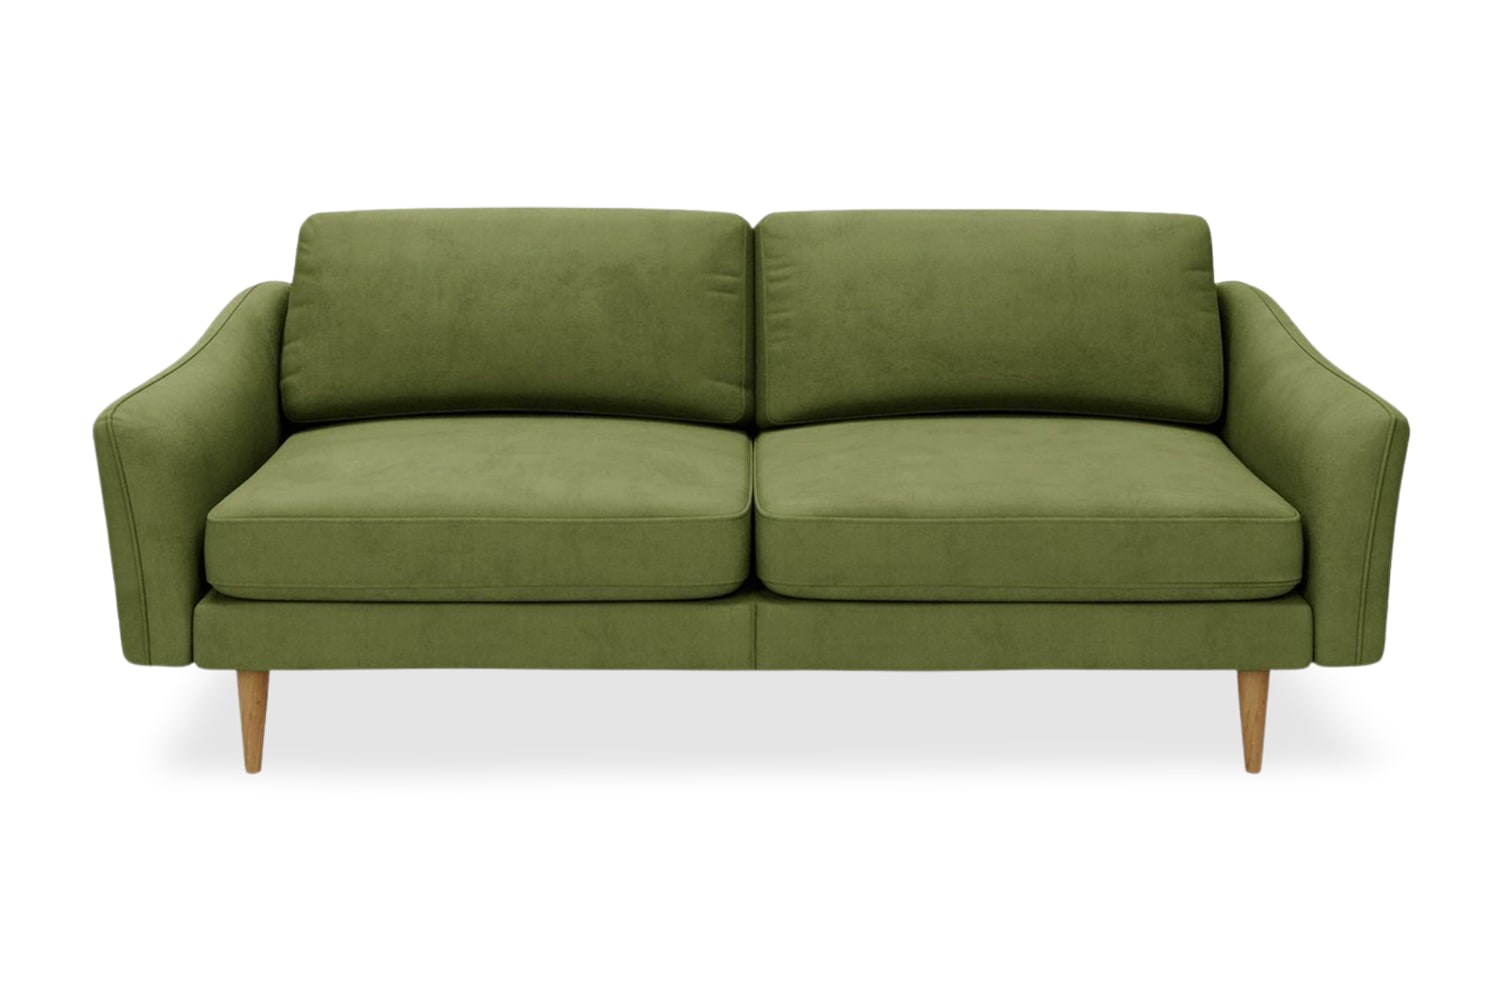 SNUG | The Rebel 3 Seater Sofa in Olive variant_40414890524720